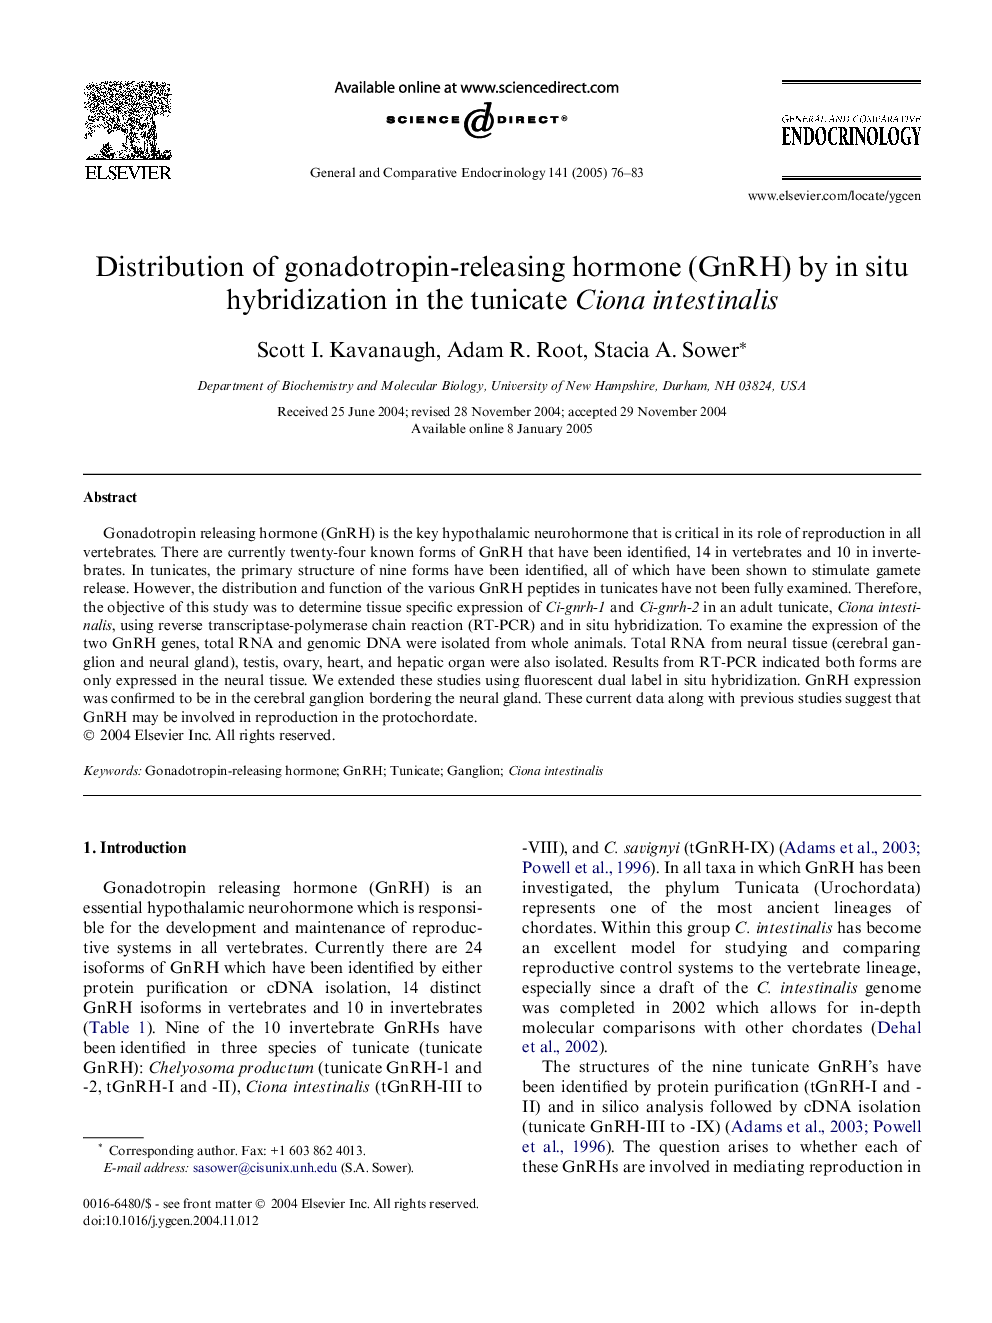 Distribution of gonadotropin-releasing hormone (GnRH) by in situ hybridization in the tunicate Ciona intestinalis